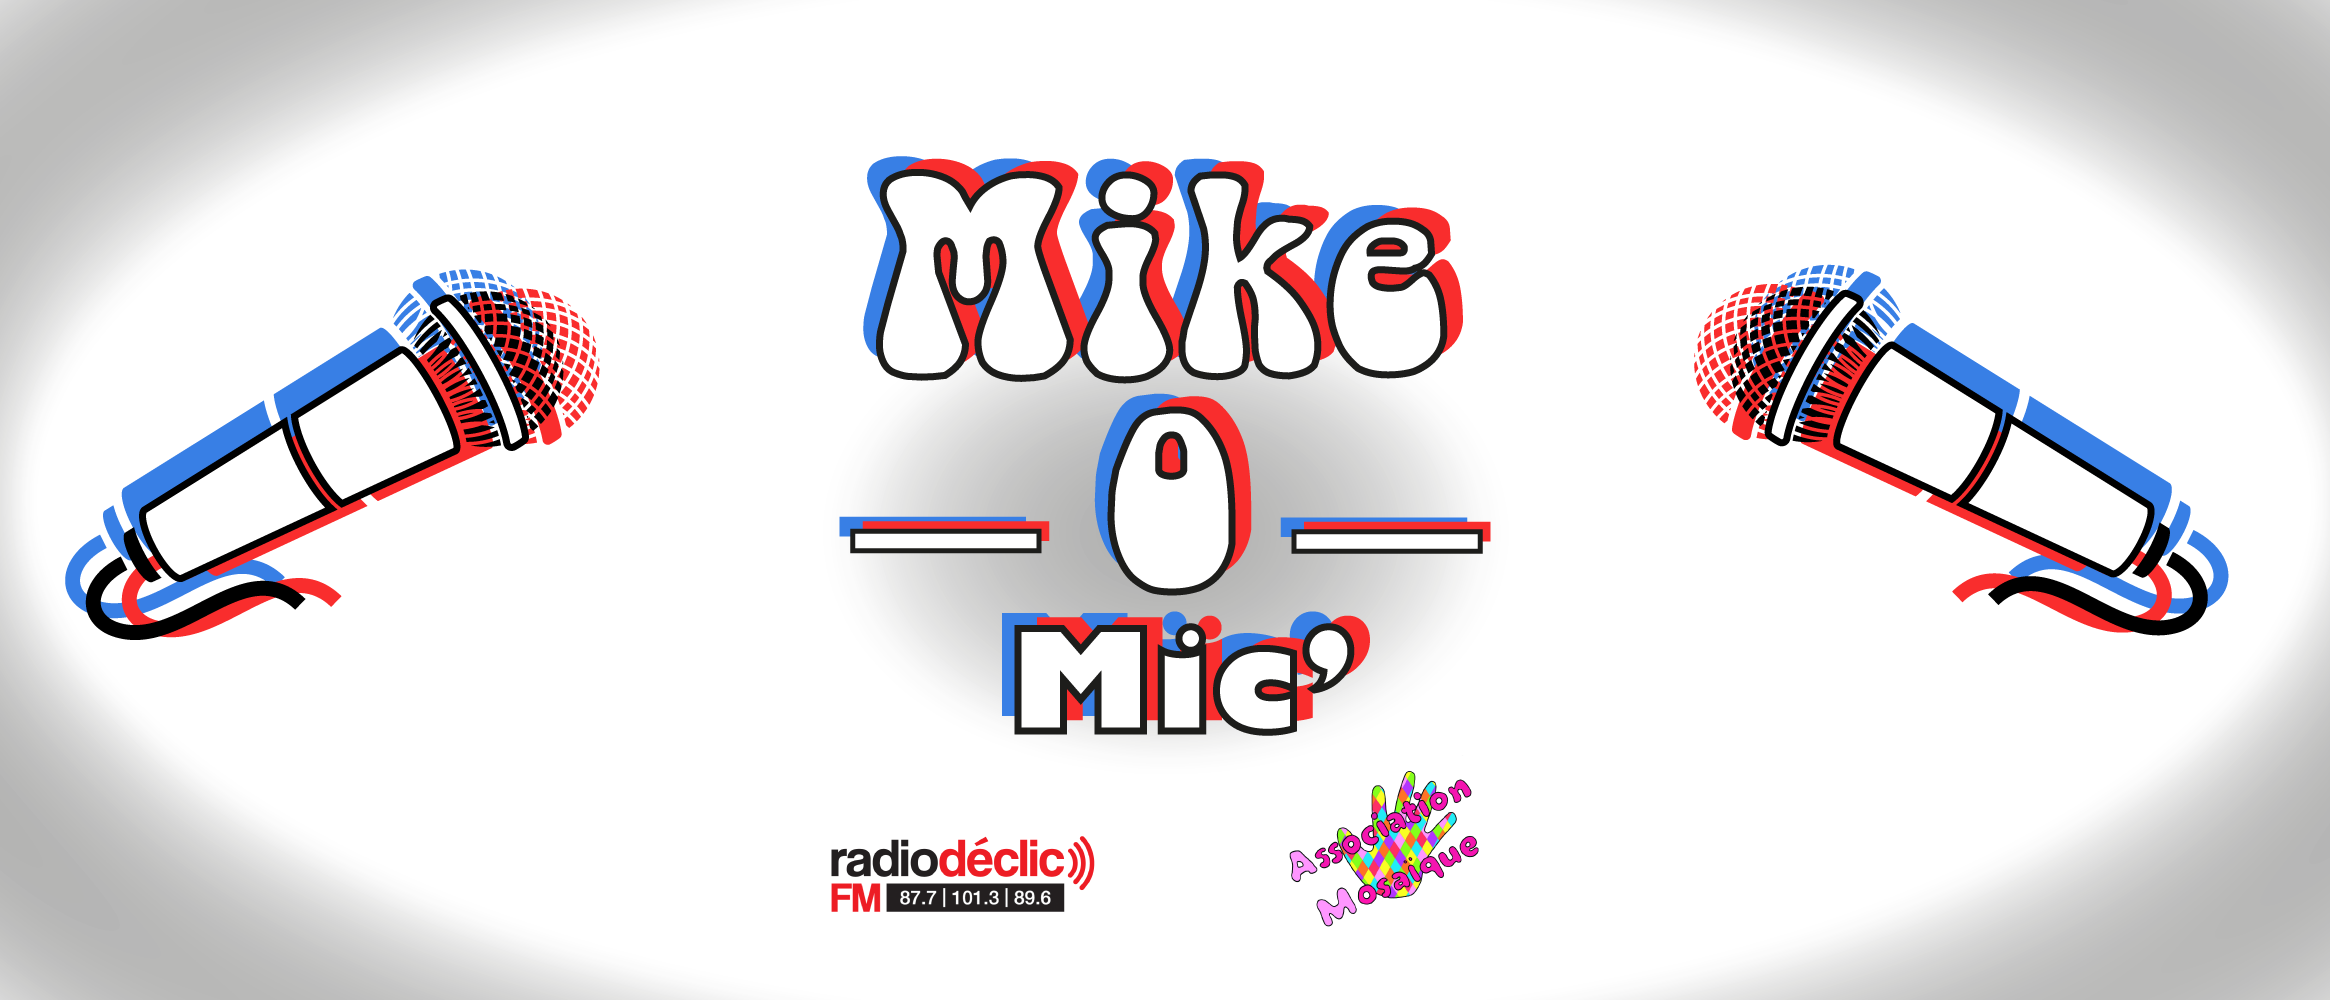 Mike O Mic site